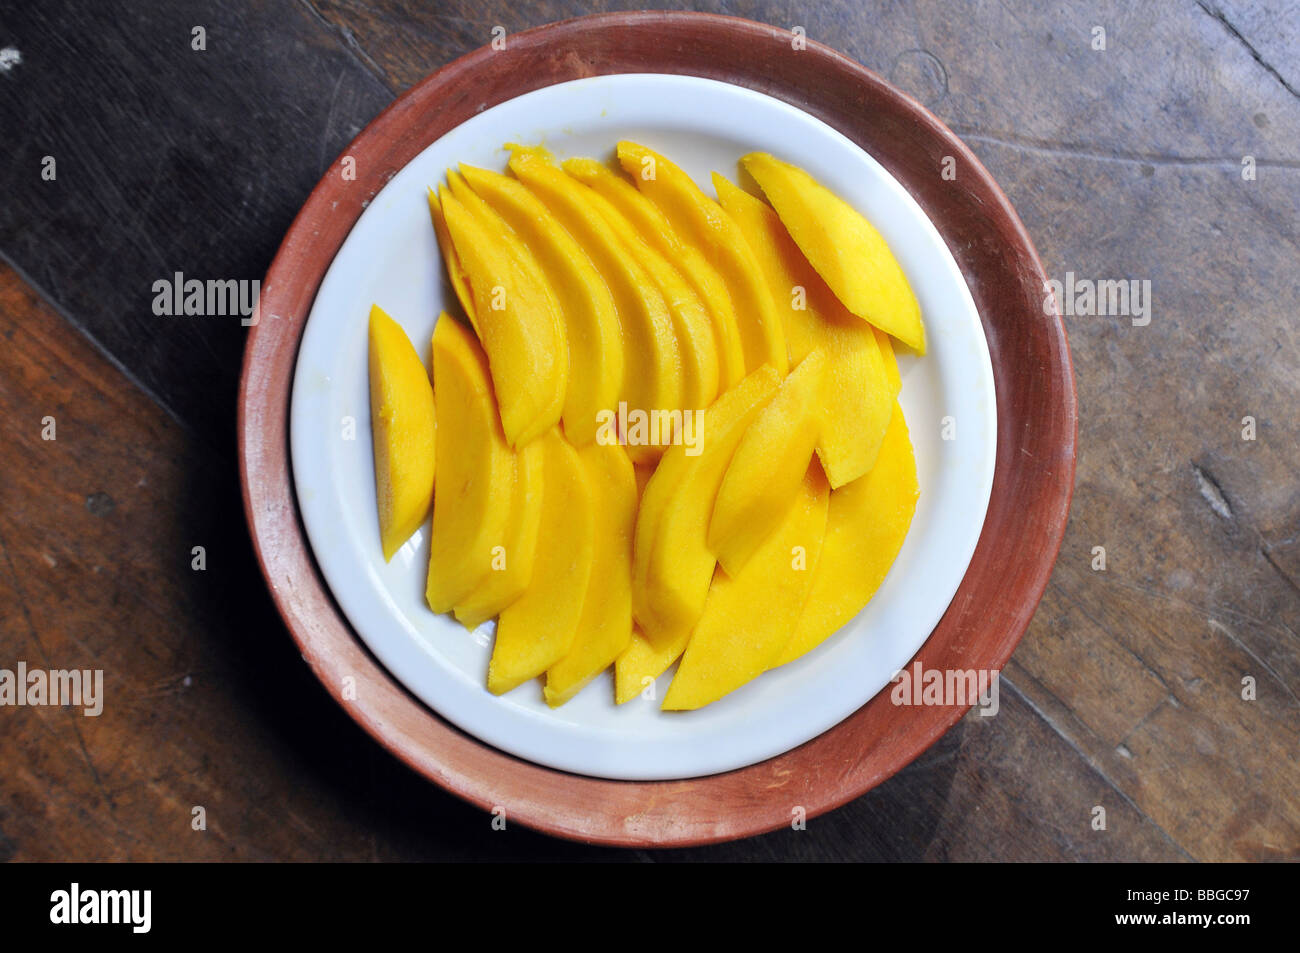 Mango Cut Into Slices On A Plate Stock Photo Alamy,Sacagawea Coin Back